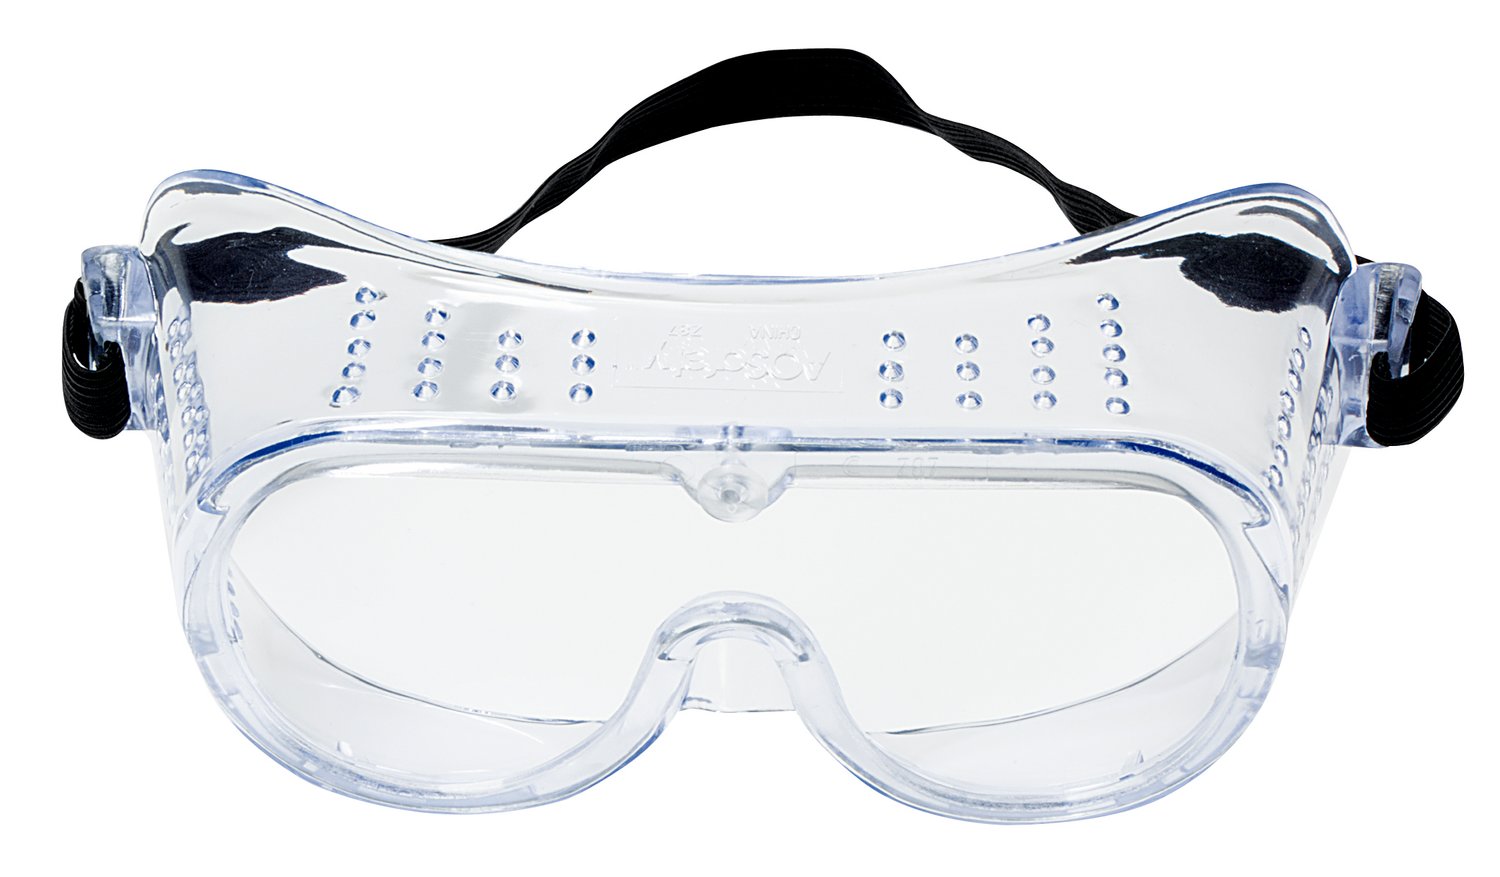 7000030007 - 3M 332 Impact Safety Goggles Anti-Fog 40651-00000-10, Clear Anti Fog
Lens, 10 EA/Case